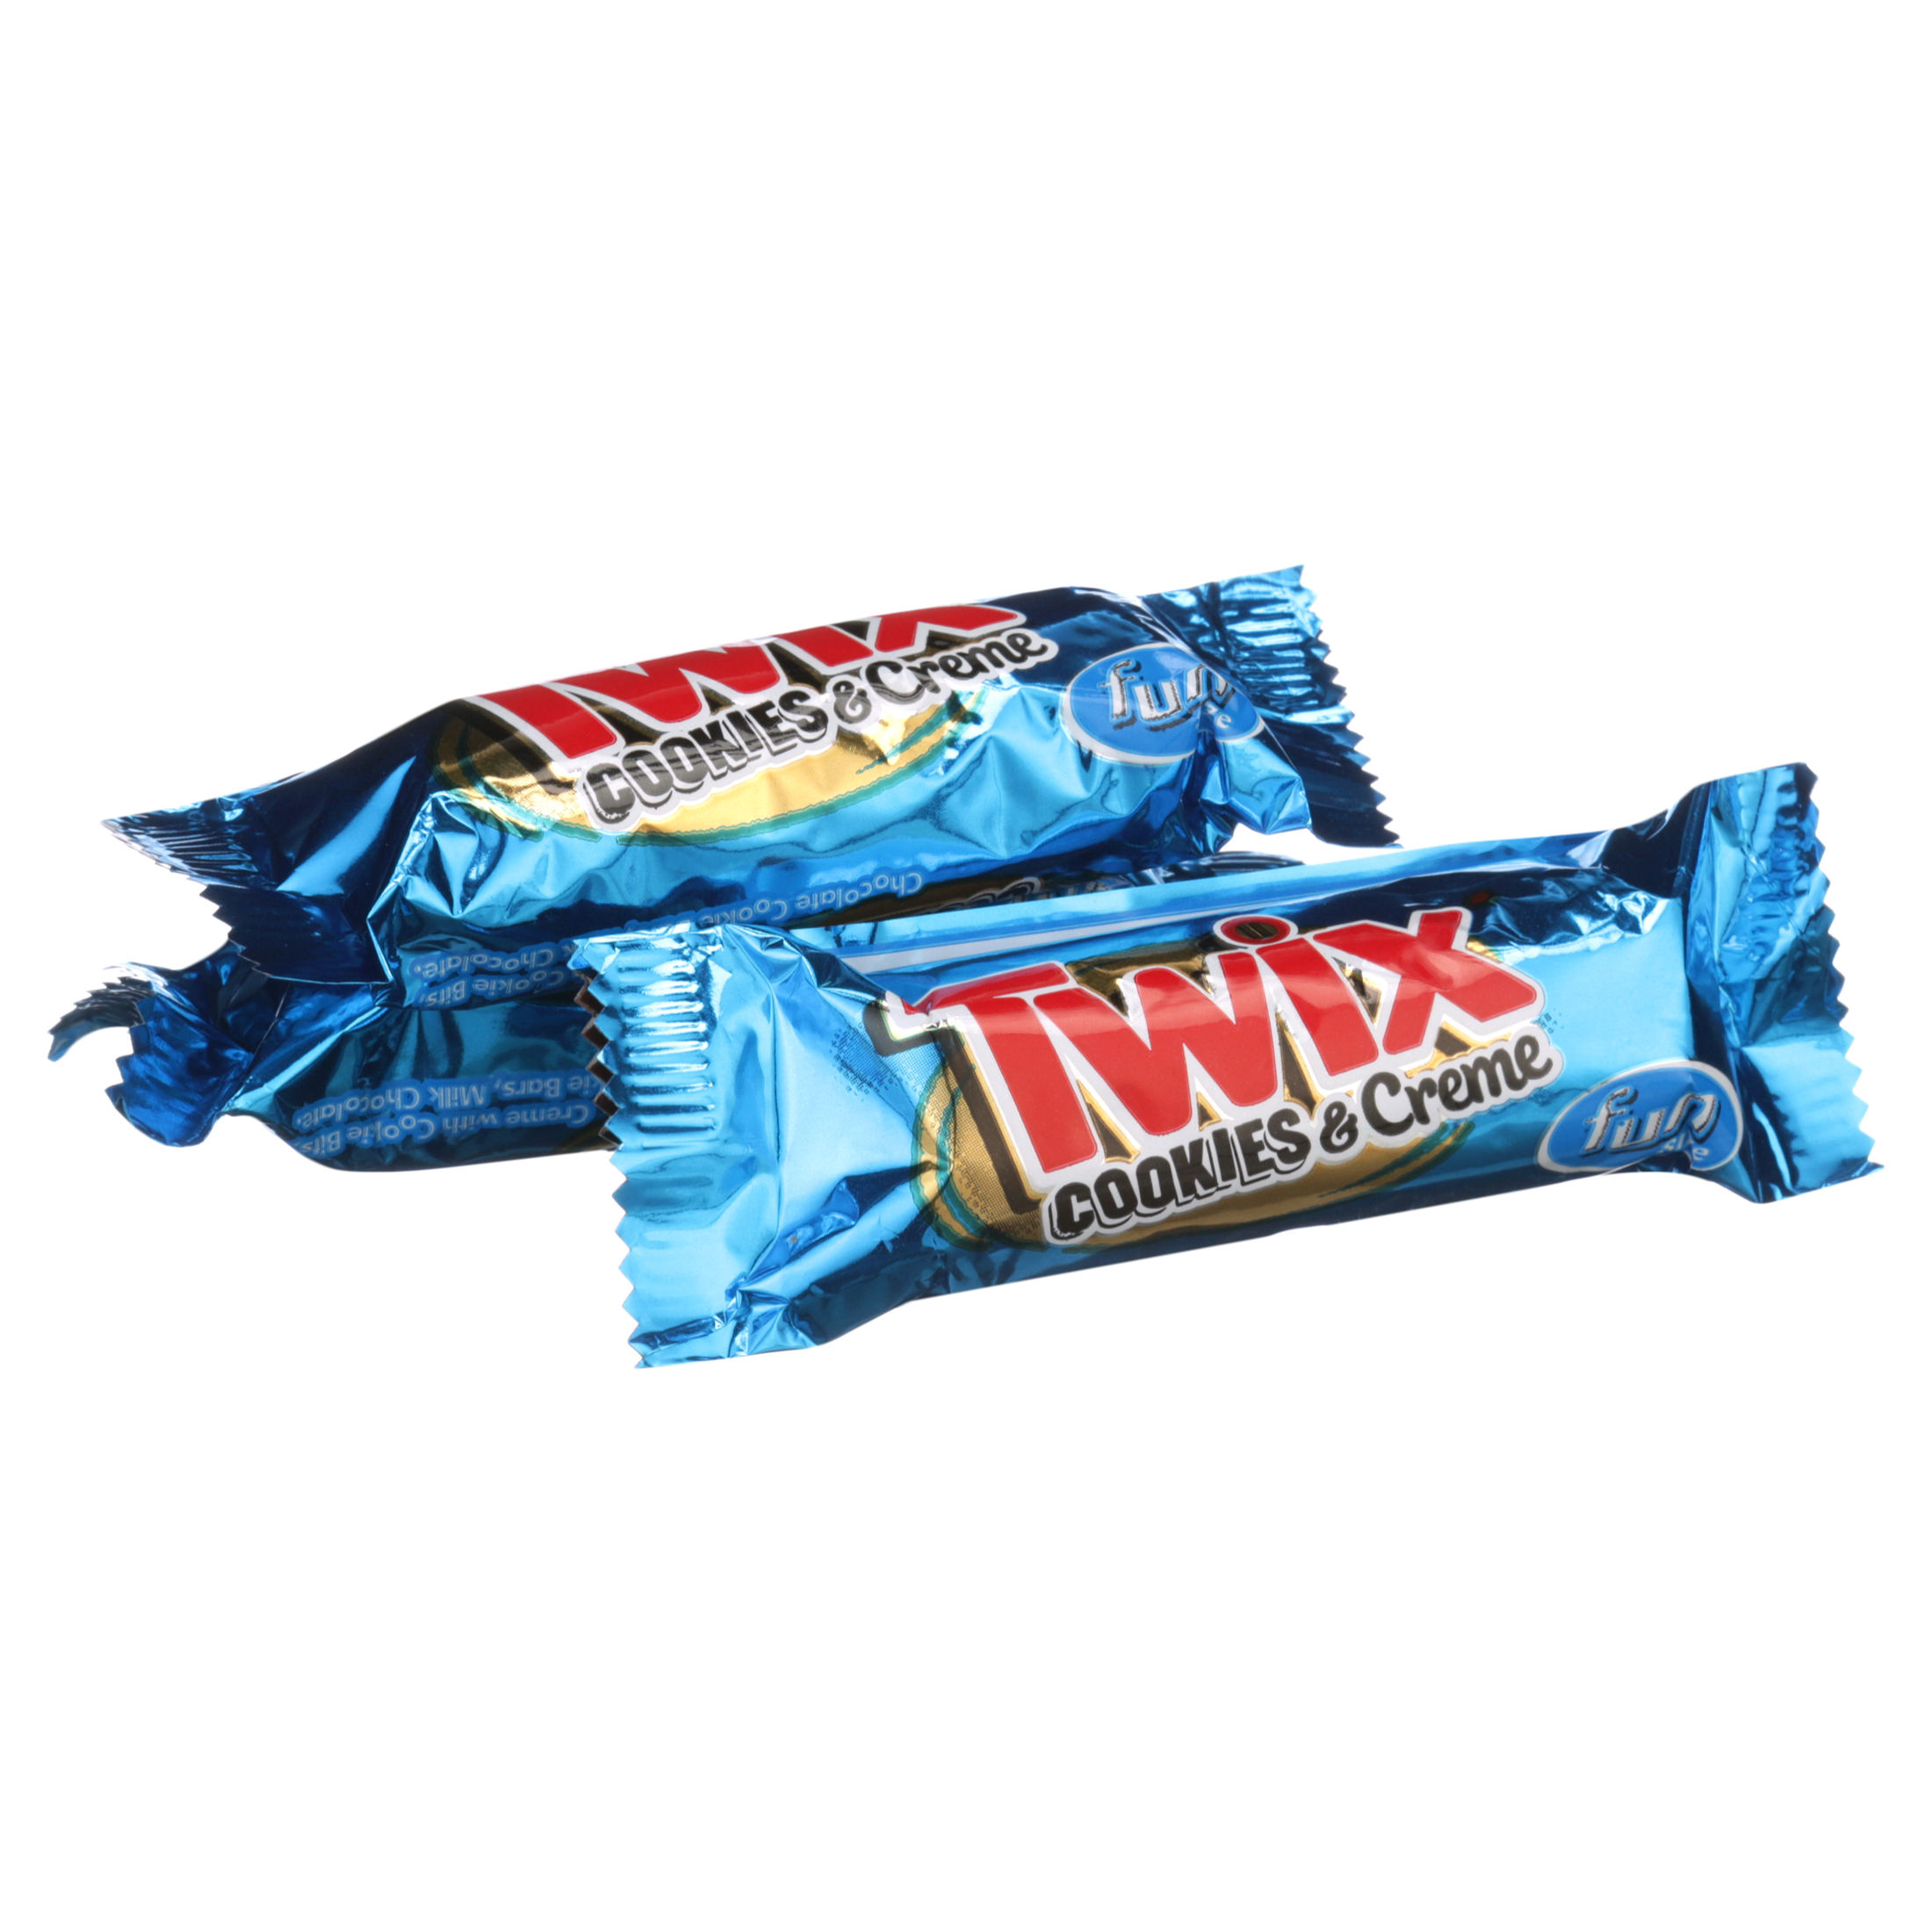 Twix Cookies & Creme – Candy Paradise